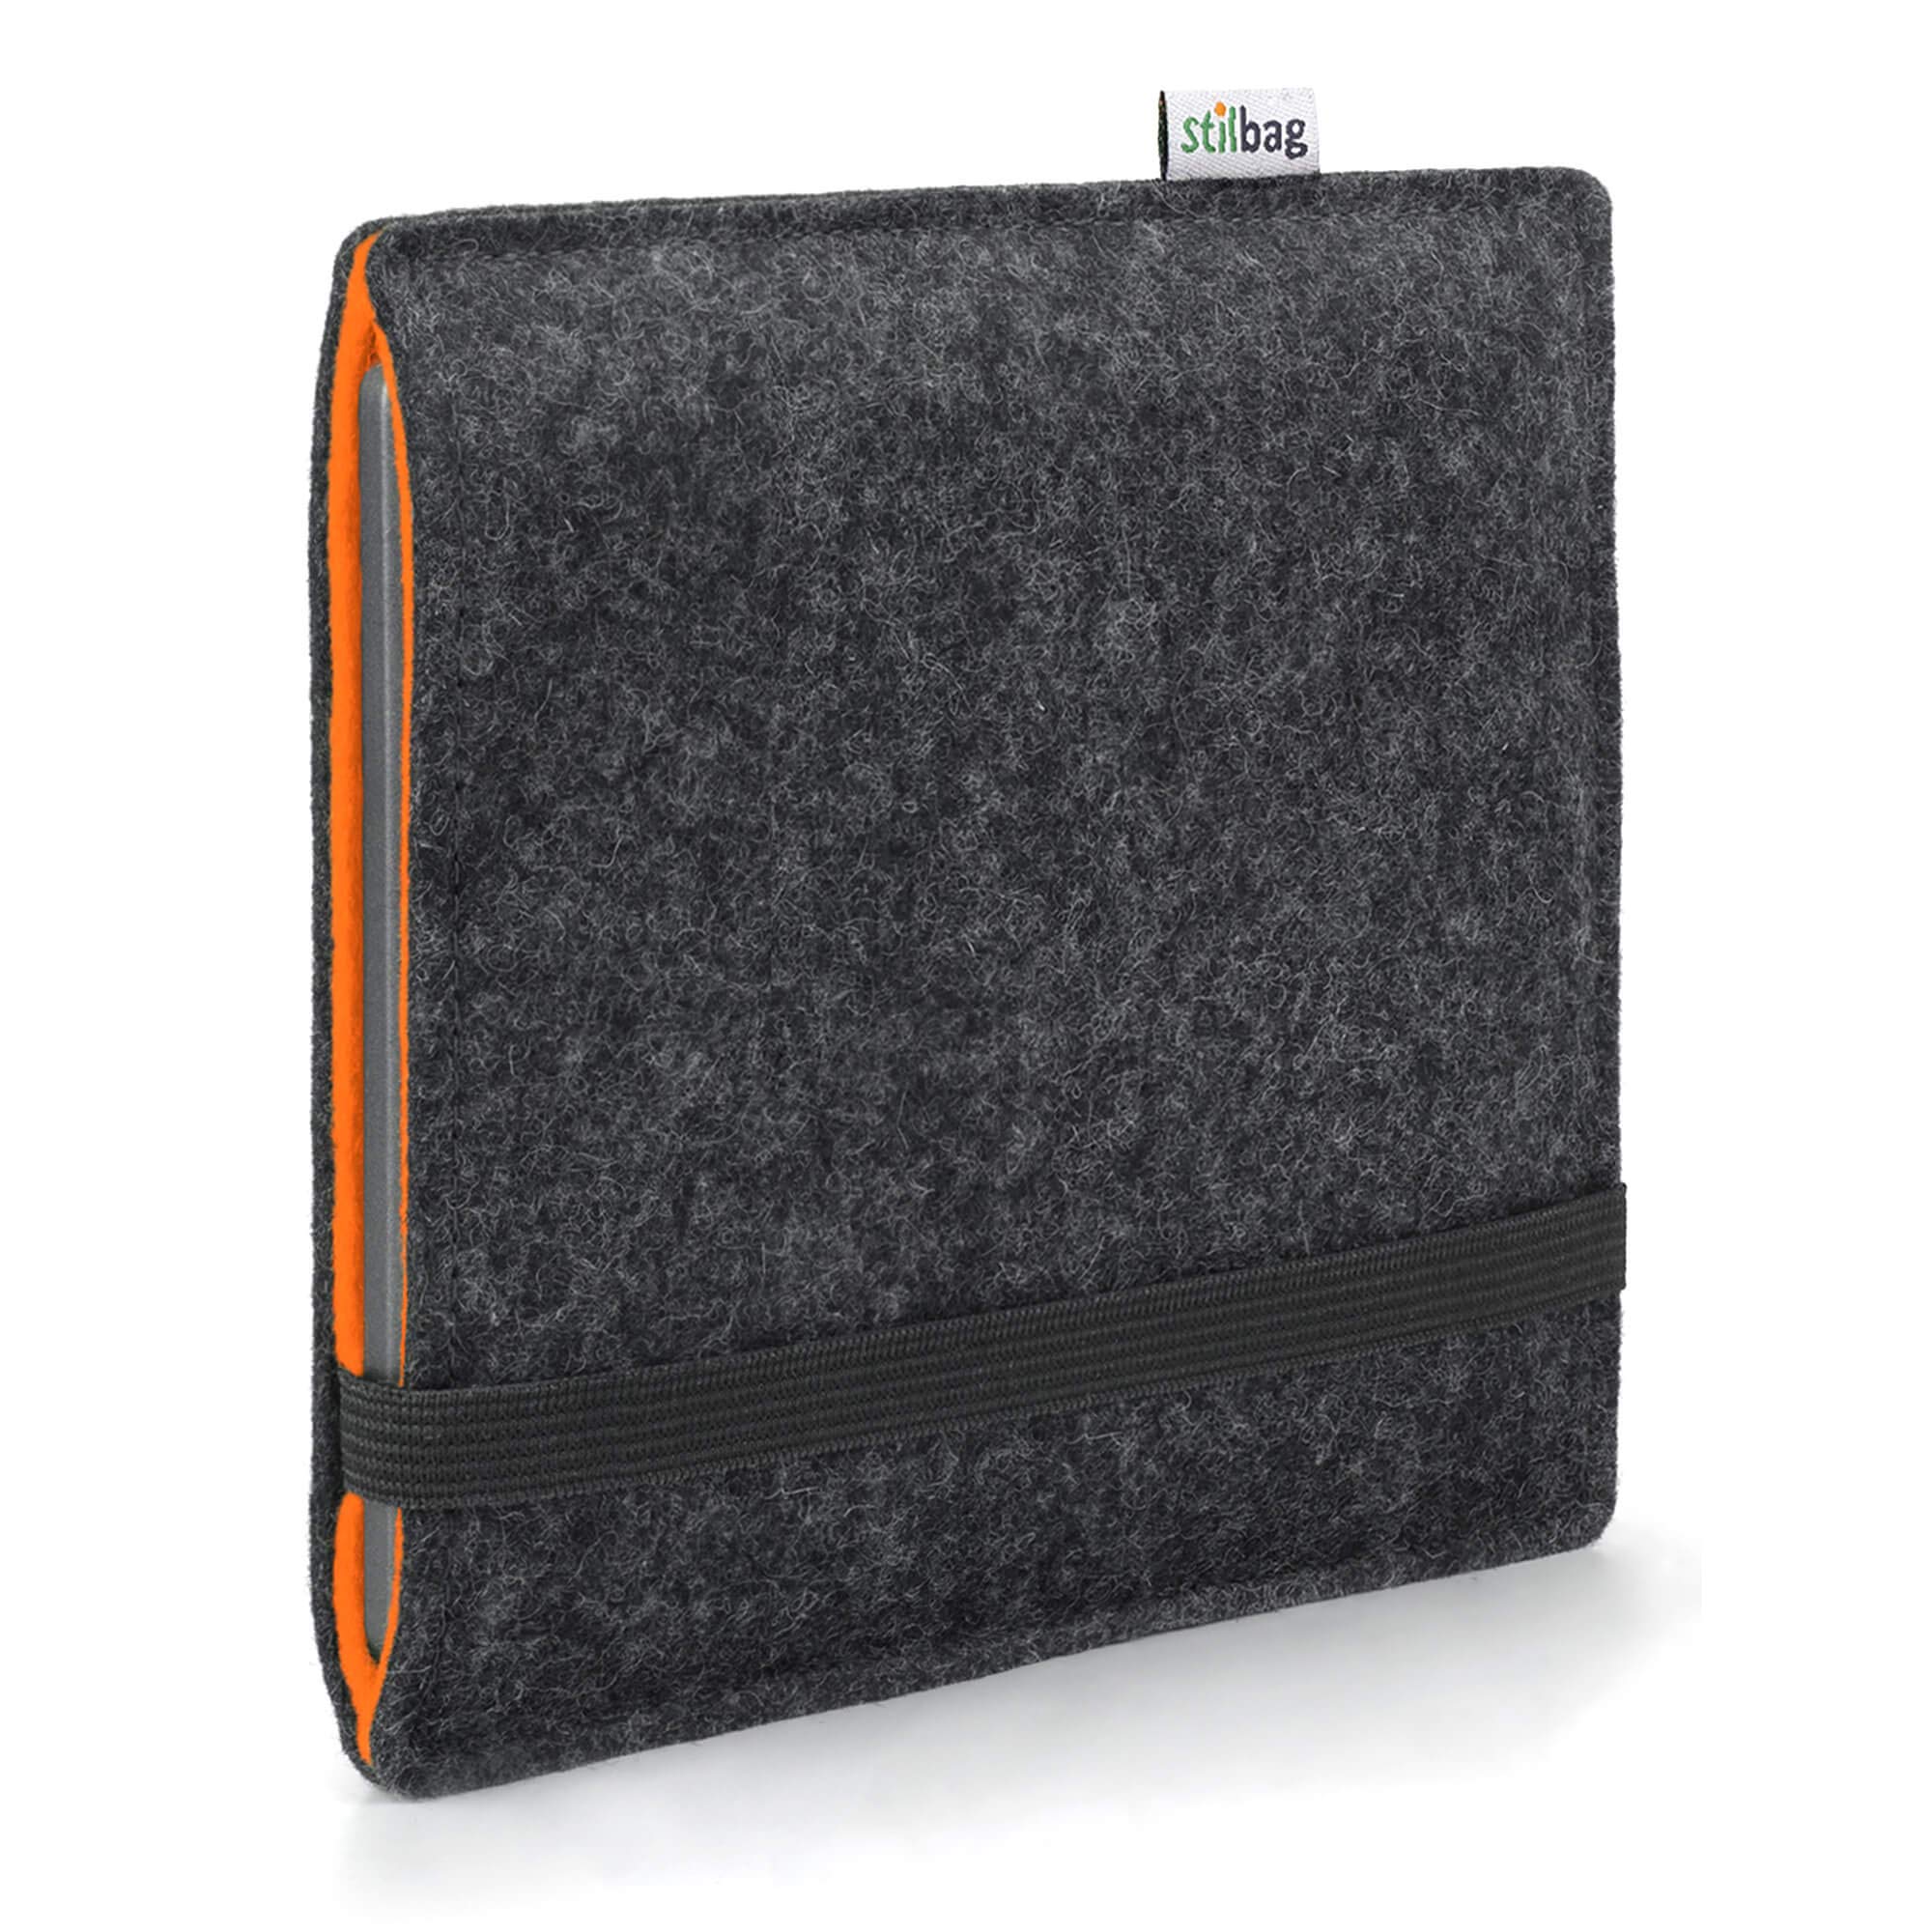 Stilbag e-Reader Hülle Finn für Amazon Kindle Oasis (10. Generation) | Wollfilz anthrazit/orange | Schutzhülle Made in Germany